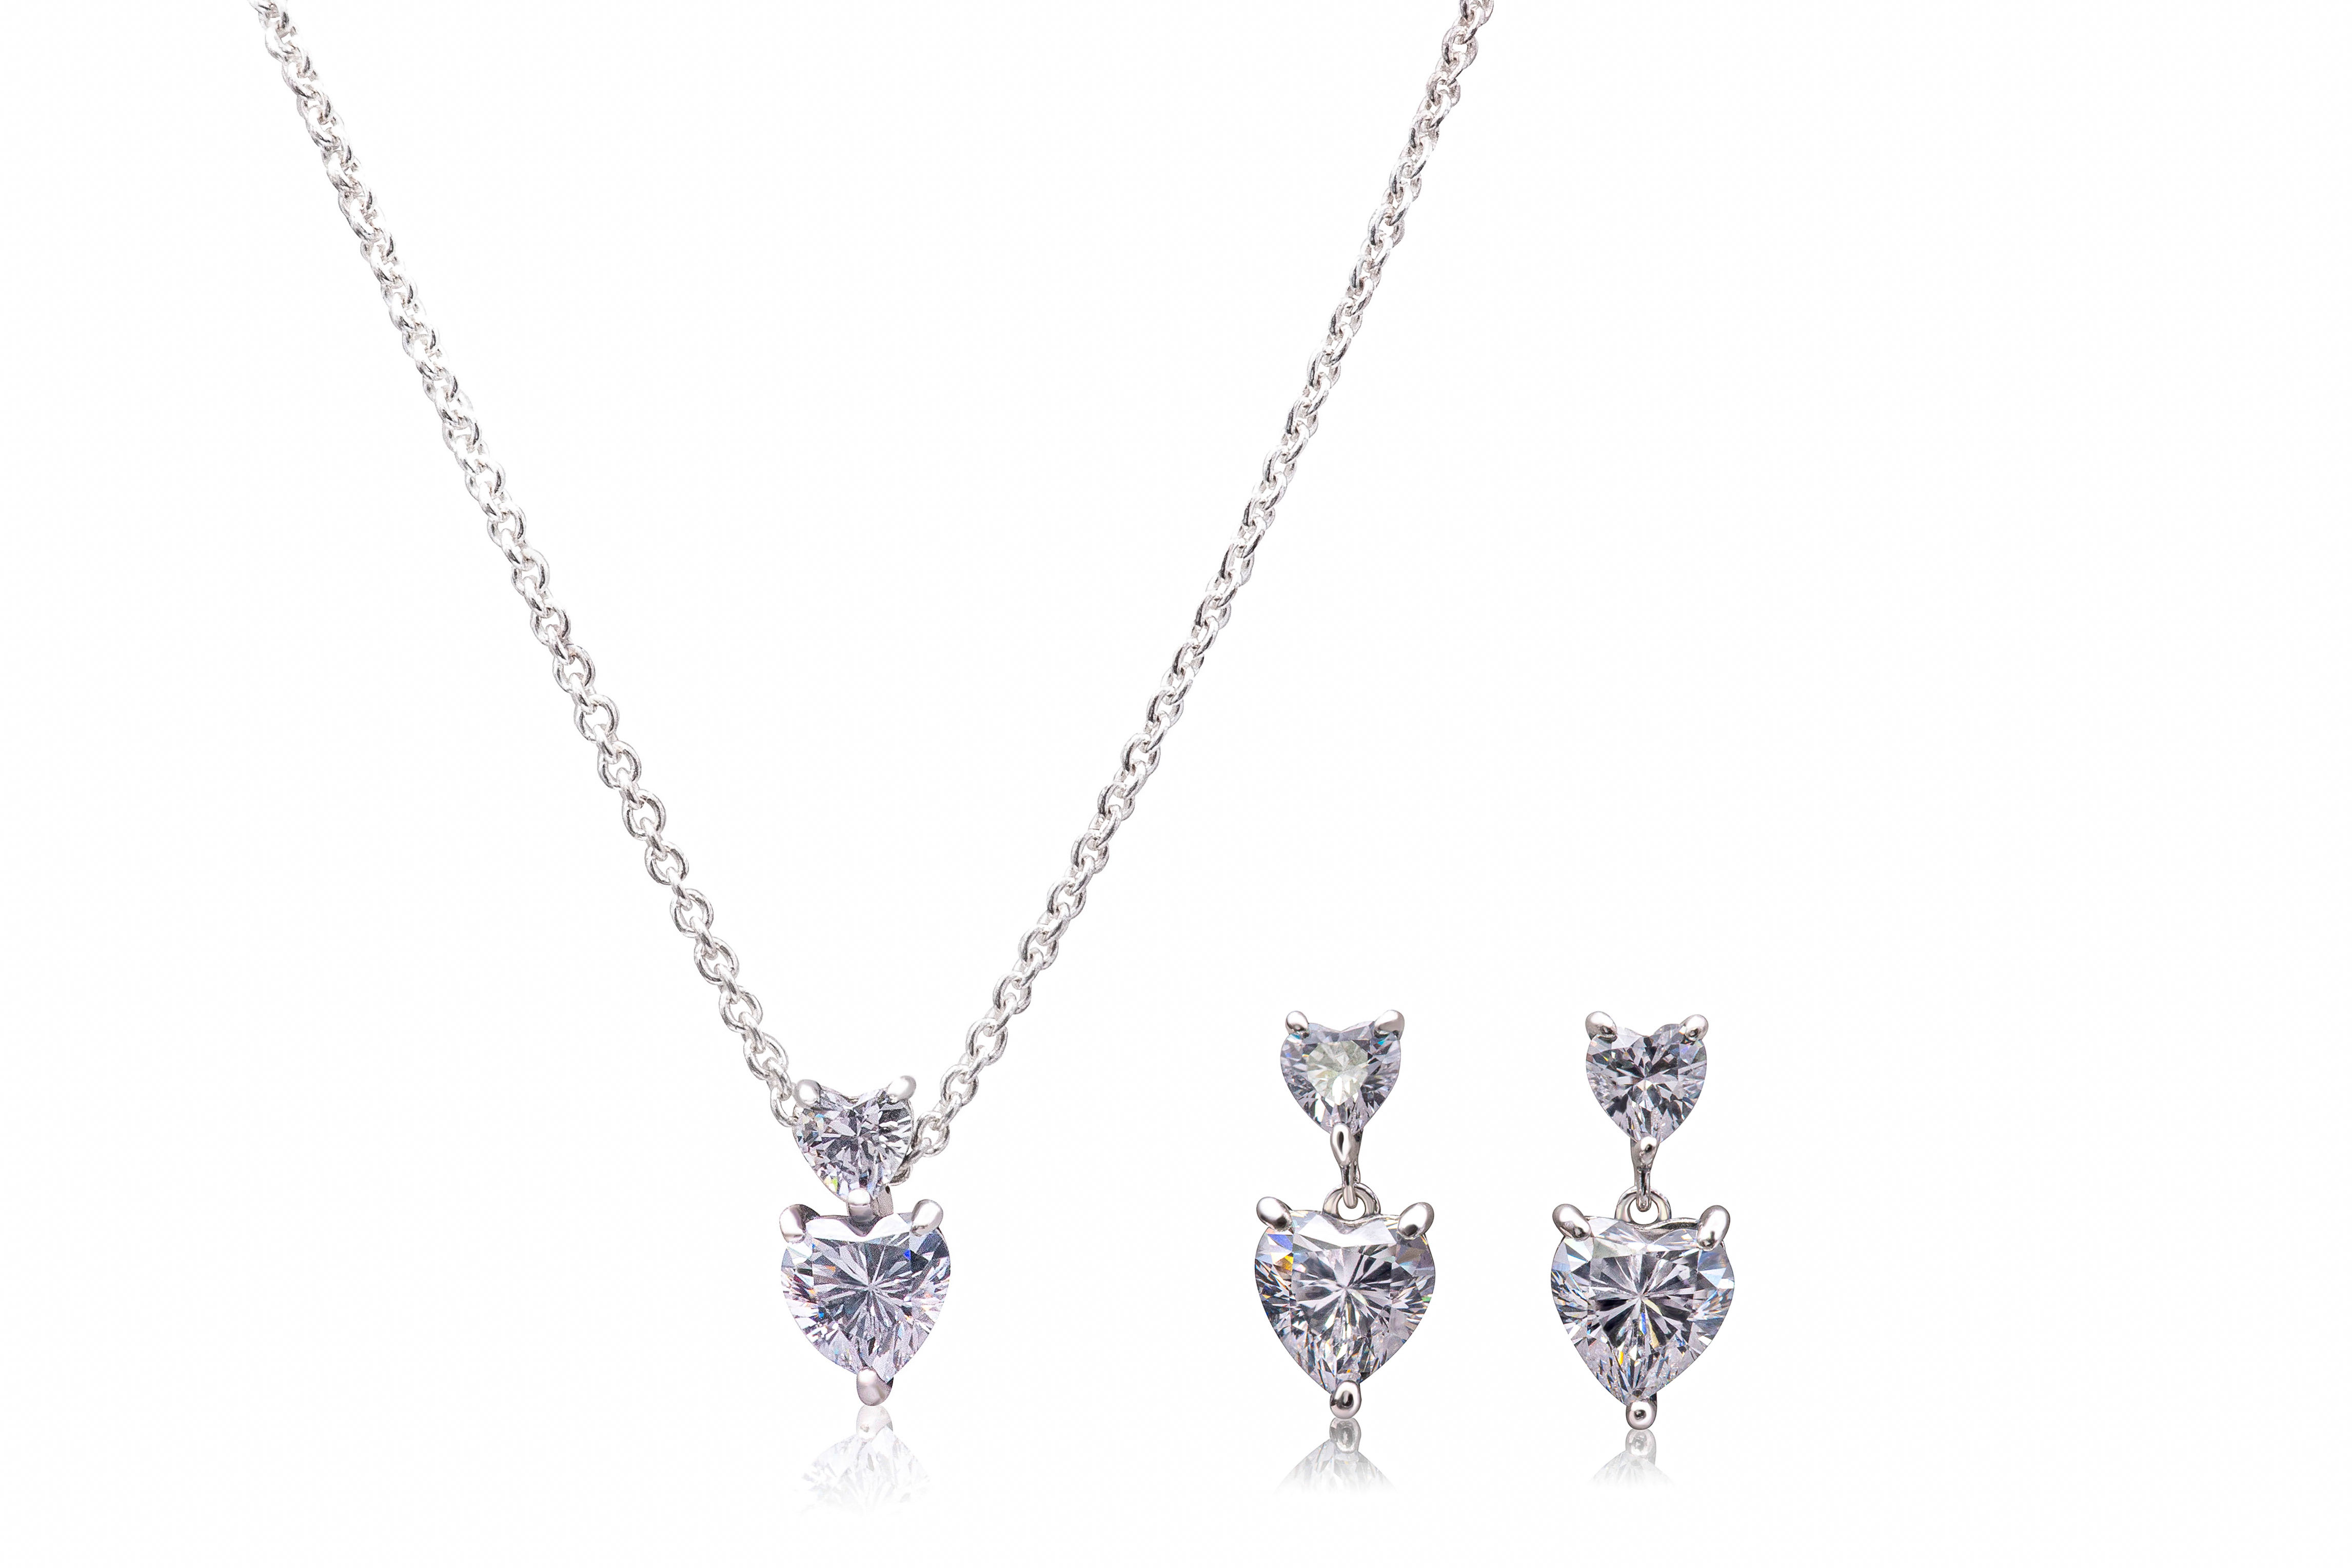 Pandora Sparkling Double Heart Jewelry Gift Set